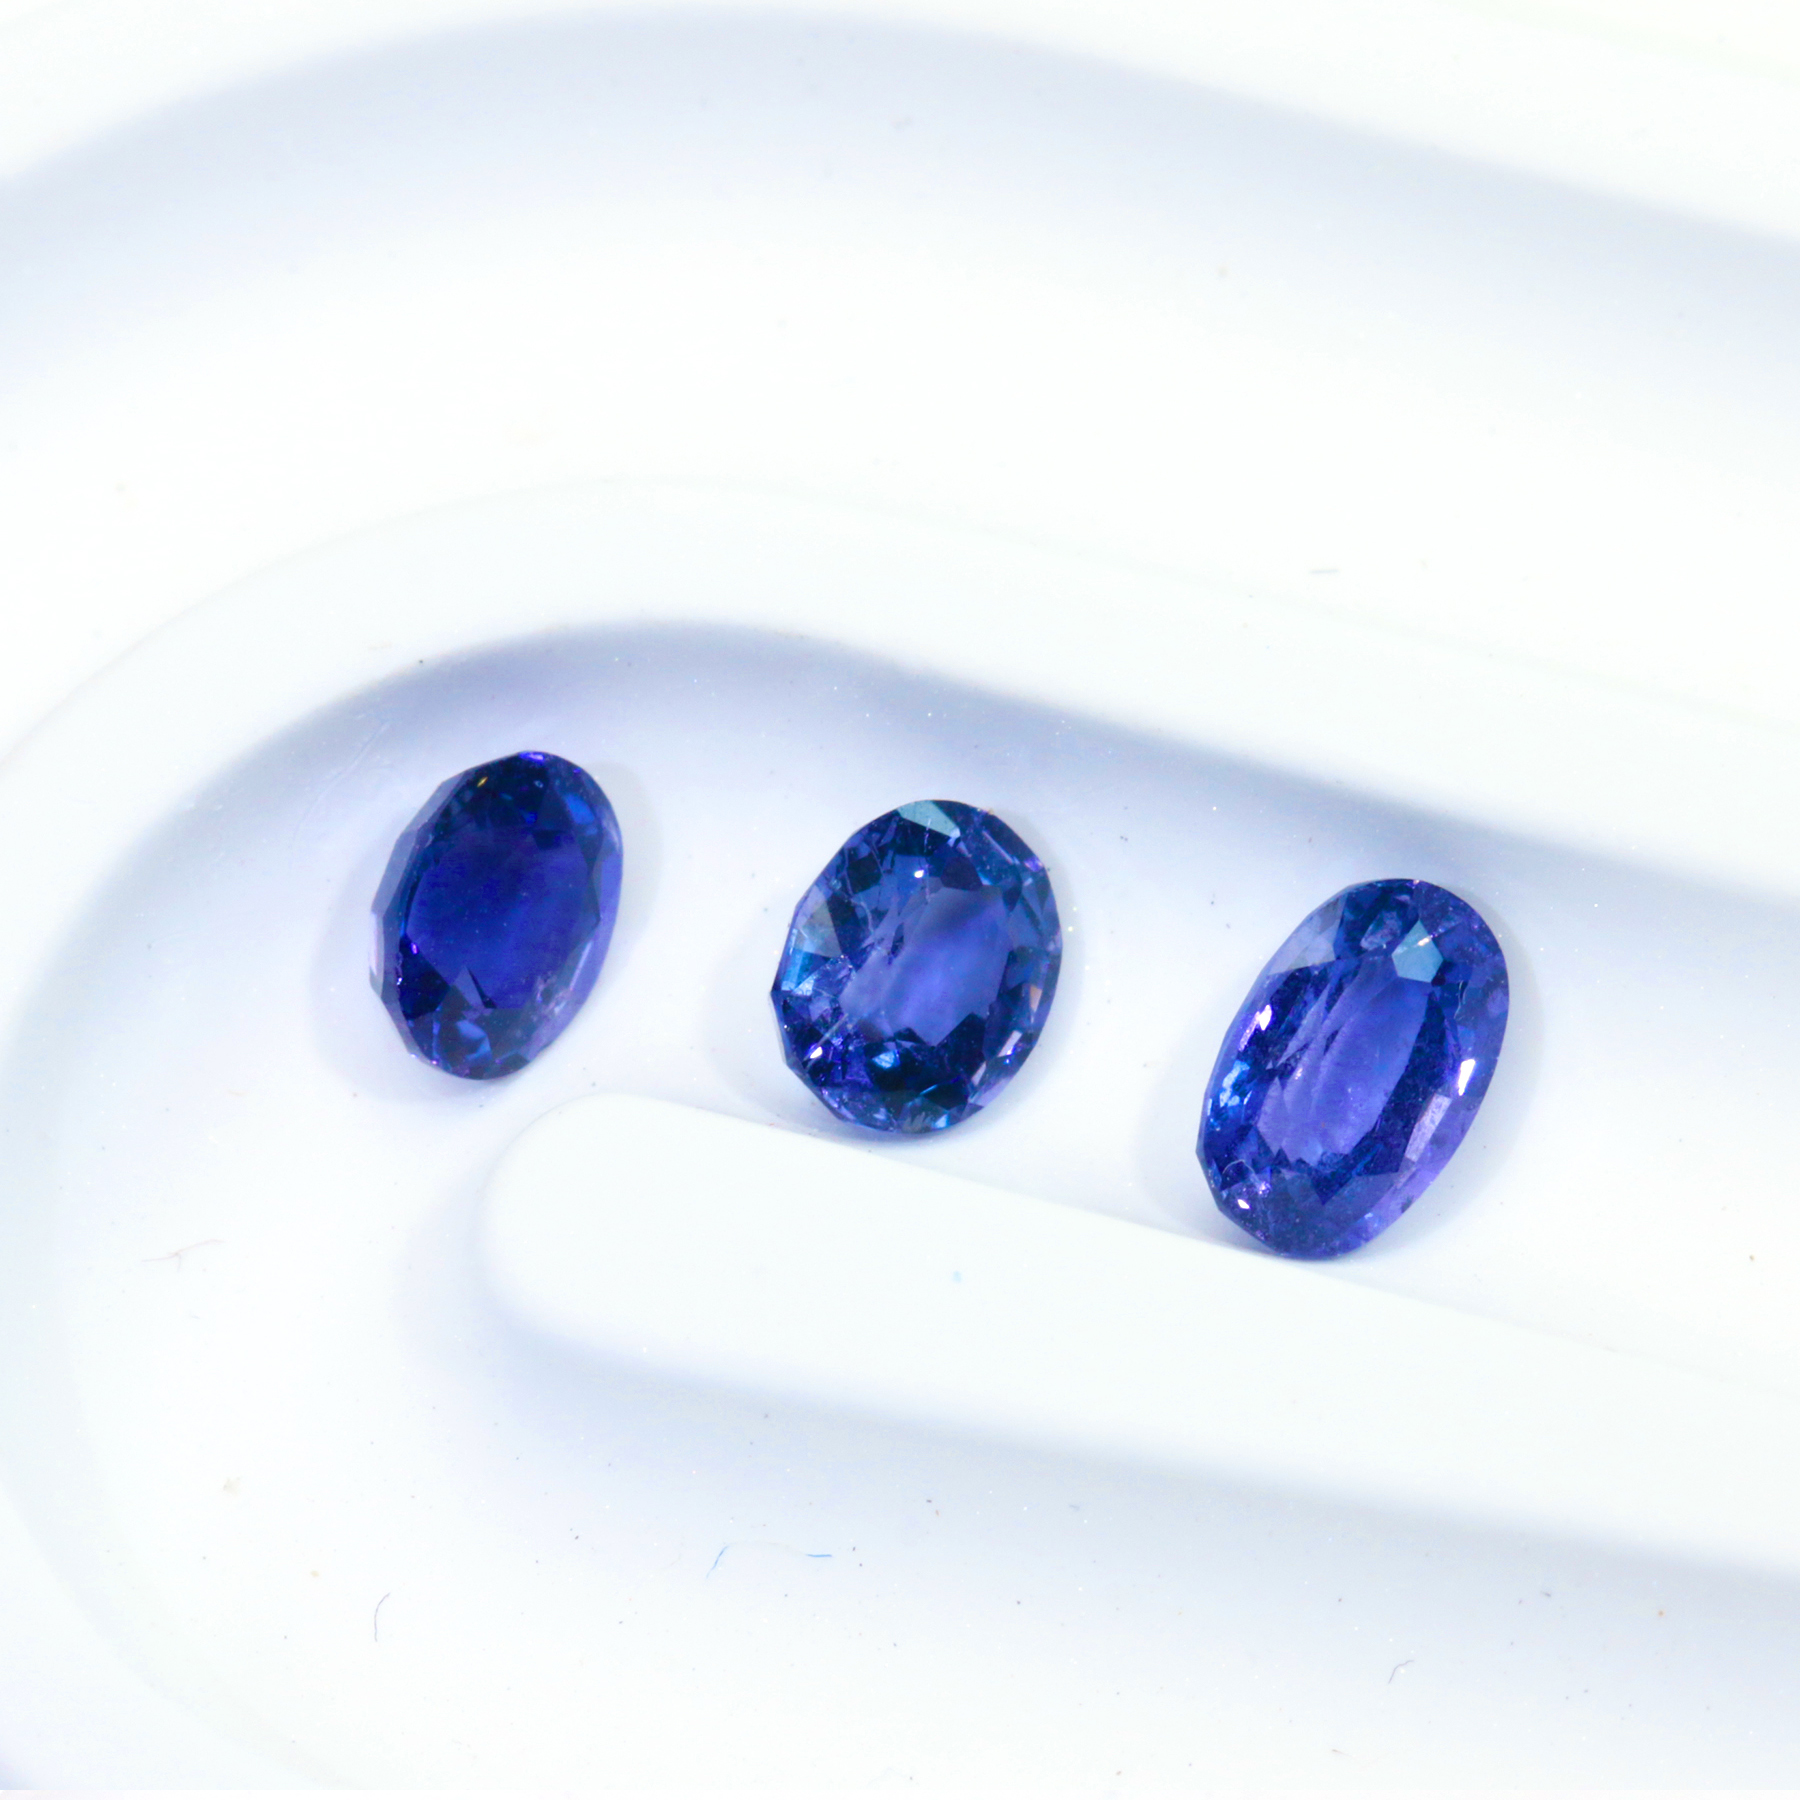 what does blue sapphire symbolize?